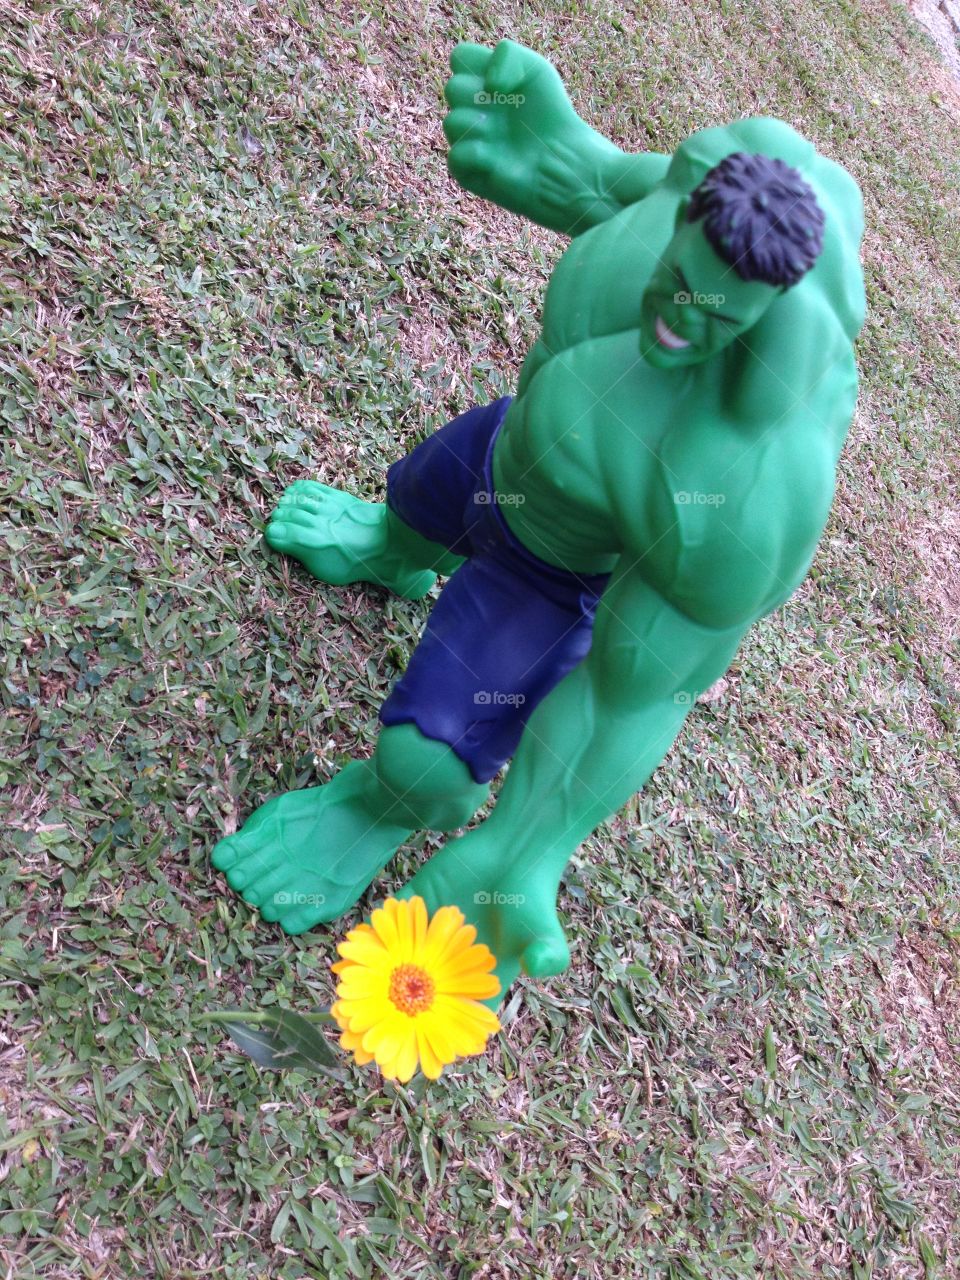 Hulk and flowers
